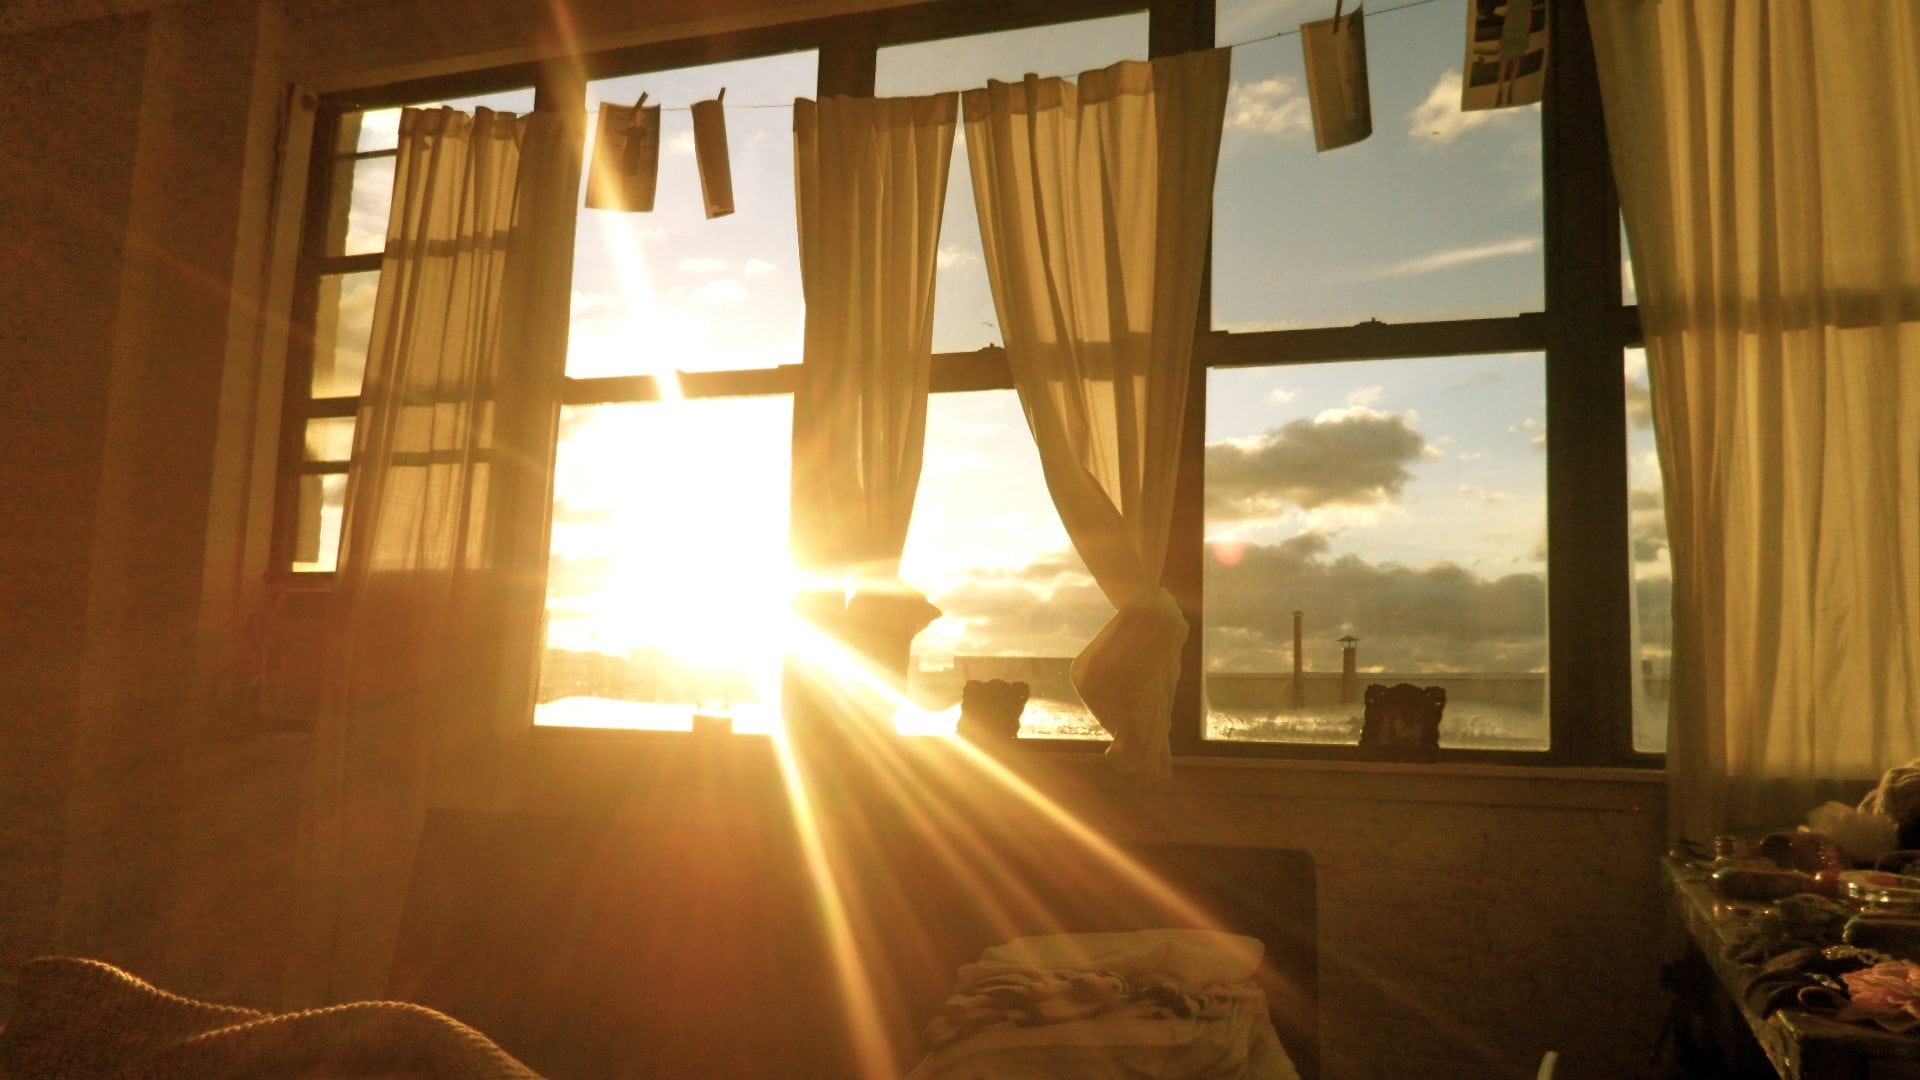 The window last night. Солнечный свет в окно. Солнце светит в окно. Луч солнца в окне. Лучи солнца в комнате.